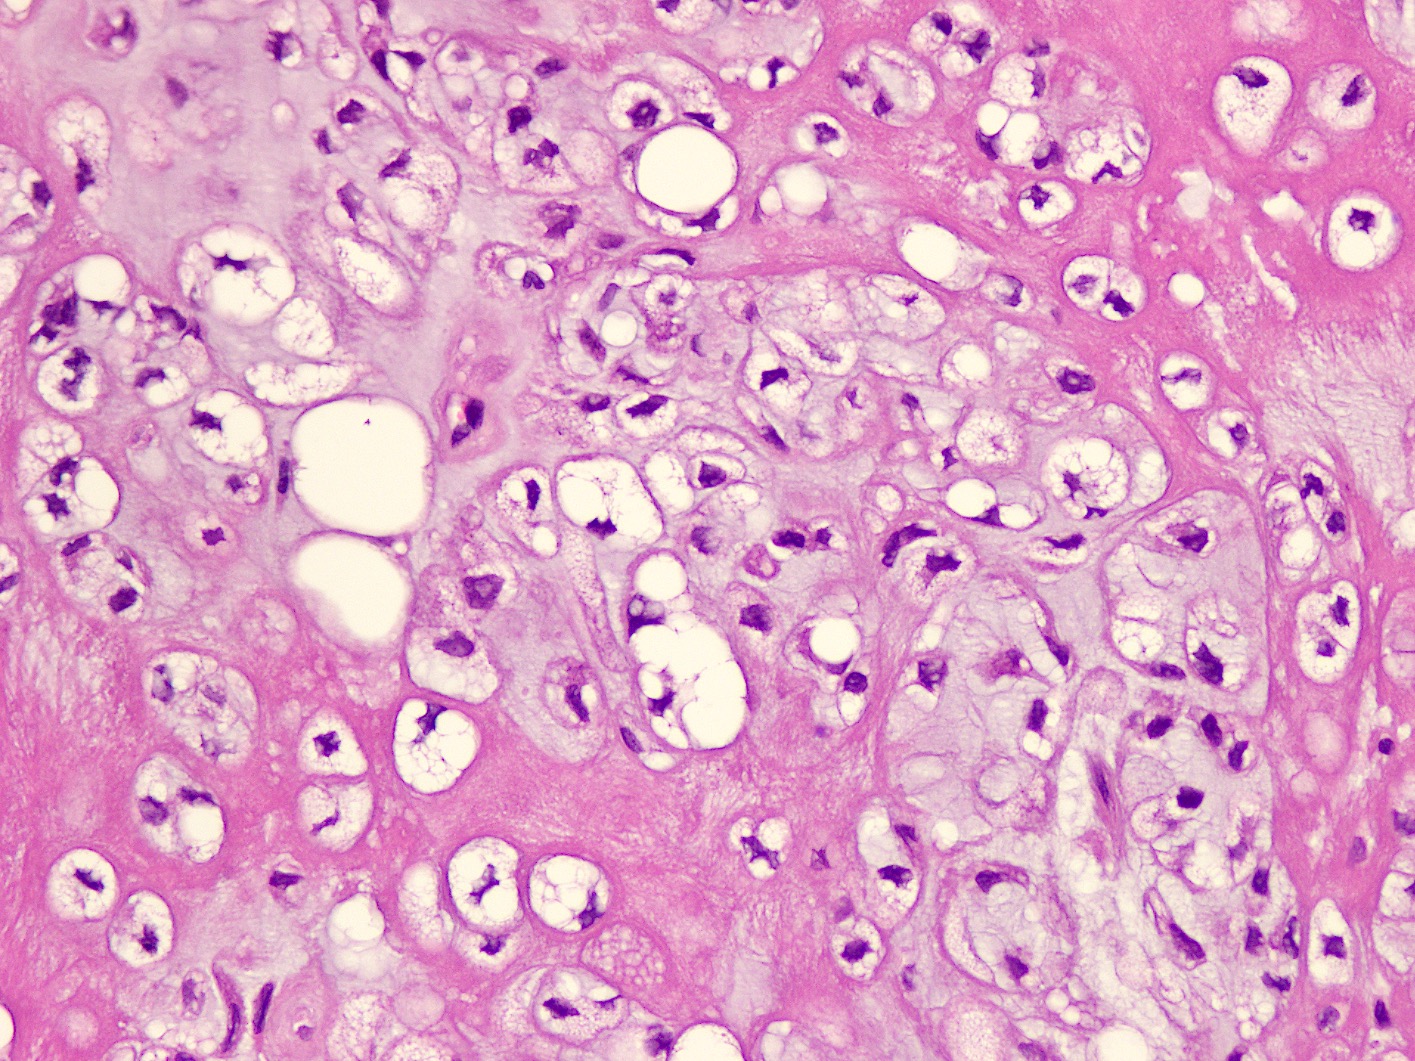 Multivacuolated lipoblasts